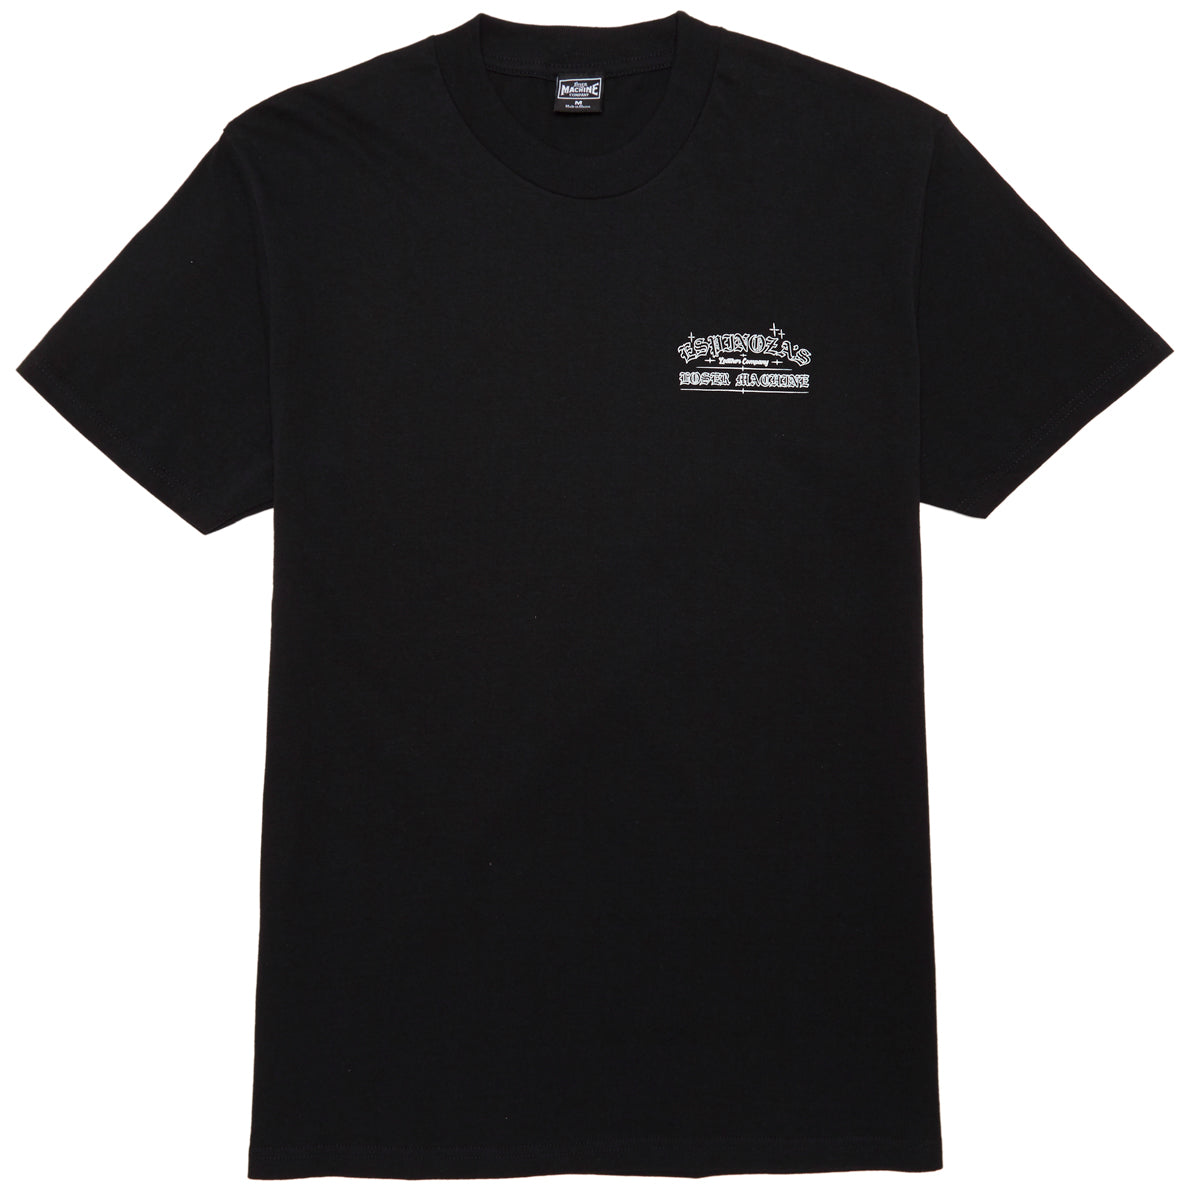 Loser Machine x Espinozas Protected T-Shirt - Black image 2